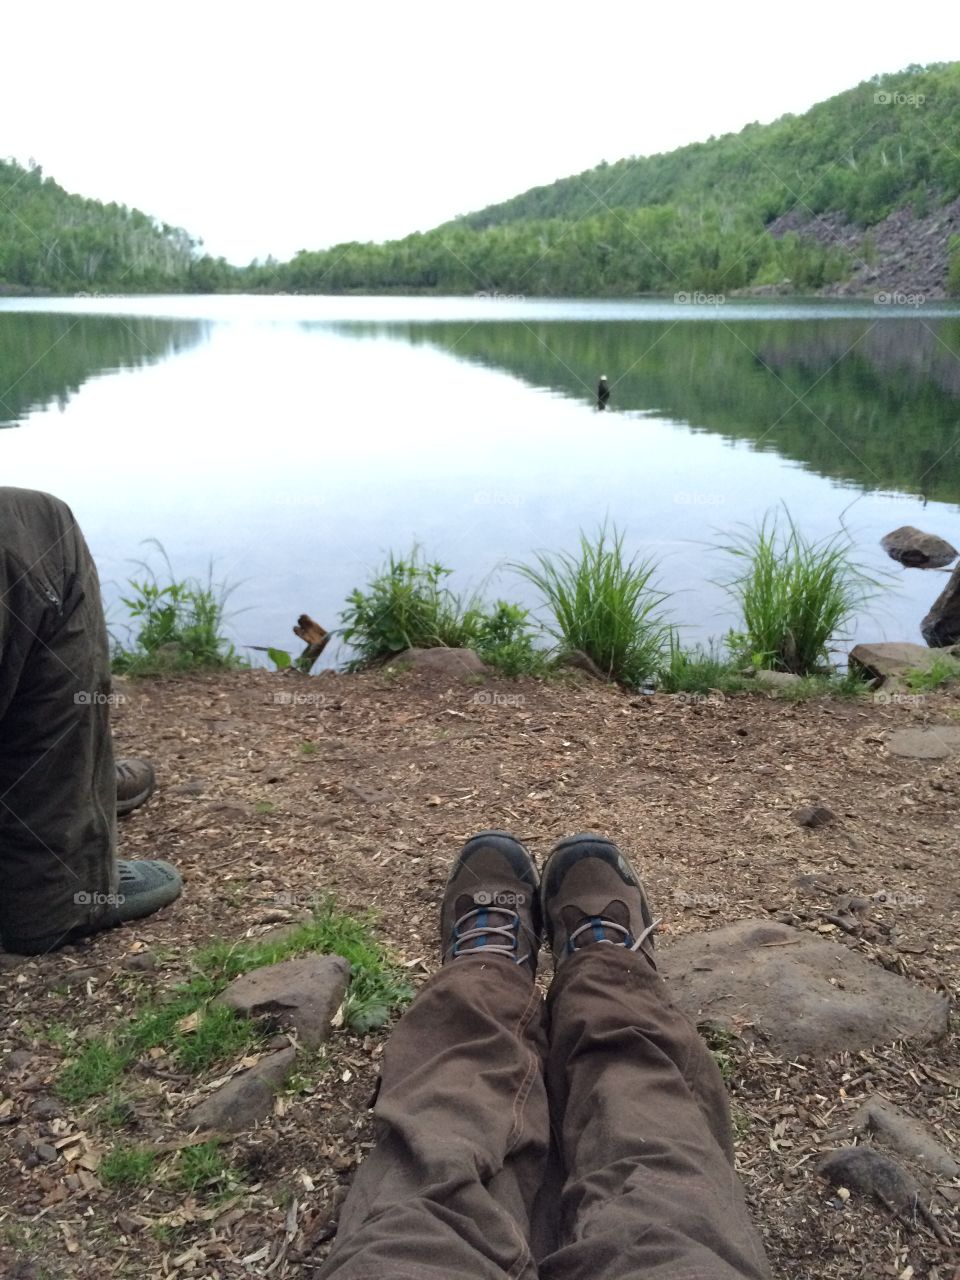 Camping and backpacking at a lake, camping feet exposed